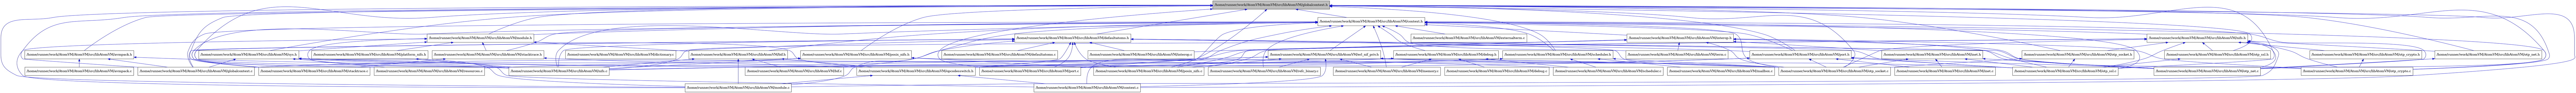 digraph {
    graph [bgcolor="#00000000"]
    node [shape=rectangle style=filled fillcolor="#FFFFFF" font=Helvetica padding=2]
    edge [color="#1414CE"]
    "9" [label="/home/runner/work/AtomVM/AtomVM/src/libAtomVM/bif.c" tooltip="/home/runner/work/AtomVM/AtomVM/src/libAtomVM/bif.c"]
    "46" [label="/home/runner/work/AtomVM/AtomVM/src/libAtomVM/dictionary.c" tooltip="/home/runner/work/AtomVM/AtomVM/src/libAtomVM/dictionary.c"]
    "8" [label="/home/runner/work/AtomVM/AtomVM/src/libAtomVM/bif.h" tooltip="/home/runner/work/AtomVM/AtomVM/src/libAtomVM/bif.h"]
    "31" [label="/home/runner/work/AtomVM/AtomVM/src/libAtomVM/platform_nifs.h" tooltip="/home/runner/work/AtomVM/AtomVM/src/libAtomVM/platform_nifs.h"]
    "19" [label="/home/runner/work/AtomVM/AtomVM/src/libAtomVM/posix_nifs.c" tooltip="/home/runner/work/AtomVM/AtomVM/src/libAtomVM/posix_nifs.c"]
    "47" [label="/home/runner/work/AtomVM/AtomVM/src/libAtomVM/posix_nifs.h" tooltip="/home/runner/work/AtomVM/AtomVM/src/libAtomVM/posix_nifs.h"]
    "45" [label="/home/runner/work/AtomVM/AtomVM/src/libAtomVM/defaultatoms.c" tooltip="/home/runner/work/AtomVM/AtomVM/src/libAtomVM/defaultatoms.c"]
    "44" [label="/home/runner/work/AtomVM/AtomVM/src/libAtomVM/defaultatoms.h" tooltip="/home/runner/work/AtomVM/AtomVM/src/libAtomVM/defaultatoms.h"]
    "25" [label="/home/runner/work/AtomVM/AtomVM/src/libAtomVM/inet.c" tooltip="/home/runner/work/AtomVM/AtomVM/src/libAtomVM/inet.c"]
    "24" [label="/home/runner/work/AtomVM/AtomVM/src/libAtomVM/inet.h" tooltip="/home/runner/work/AtomVM/AtomVM/src/libAtomVM/inet.h"]
    "15" [label="/home/runner/work/AtomVM/AtomVM/src/libAtomVM/scheduler.c" tooltip="/home/runner/work/AtomVM/AtomVM/src/libAtomVM/scheduler.c"]
    "42" [label="/home/runner/work/AtomVM/AtomVM/src/libAtomVM/scheduler.h" tooltip="/home/runner/work/AtomVM/AtomVM/src/libAtomVM/scheduler.h"]
    "6" [label="/home/runner/work/AtomVM/AtomVM/src/libAtomVM/context.c" tooltip="/home/runner/work/AtomVM/AtomVM/src/libAtomVM/context.c"]
    "7" [label="/home/runner/work/AtomVM/AtomVM/src/libAtomVM/context.h" tooltip="/home/runner/work/AtomVM/AtomVM/src/libAtomVM/context.h"]
    "40" [label="/home/runner/work/AtomVM/AtomVM/src/libAtomVM/port.c" tooltip="/home/runner/work/AtomVM/AtomVM/src/libAtomVM/port.c"]
    "41" [label="/home/runner/work/AtomVM/AtomVM/src/libAtomVM/port.h" tooltip="/home/runner/work/AtomVM/AtomVM/src/libAtomVM/port.h"]
    "33" [label="/home/runner/work/AtomVM/AtomVM/src/libAtomVM/stacktrace.c" tooltip="/home/runner/work/AtomVM/AtomVM/src/libAtomVM/stacktrace.c"]
    "32" [label="/home/runner/work/AtomVM/AtomVM/src/libAtomVM/stacktrace.h" tooltip="/home/runner/work/AtomVM/AtomVM/src/libAtomVM/stacktrace.h"]
    "20" [label="/home/runner/work/AtomVM/AtomVM/src/libAtomVM/refc_binary.c" tooltip="/home/runner/work/AtomVM/AtomVM/src/libAtomVM/refc_binary.c"]
    "43" [label="/home/runner/work/AtomVM/AtomVM/src/libAtomVM/mailbox.c" tooltip="/home/runner/work/AtomVM/AtomVM/src/libAtomVM/mailbox.c"]
    "10" [label="/home/runner/work/AtomVM/AtomVM/src/libAtomVM/module.c" tooltip="/home/runner/work/AtomVM/AtomVM/src/libAtomVM/module.c"]
    "30" [label="/home/runner/work/AtomVM/AtomVM/src/libAtomVM/module.h" tooltip="/home/runner/work/AtomVM/AtomVM/src/libAtomVM/module.h"]
    "3" [label="/home/runner/work/AtomVM/AtomVM/src/libAtomVM/avmpack.c" tooltip="/home/runner/work/AtomVM/AtomVM/src/libAtomVM/avmpack.c"]
    "2" [label="/home/runner/work/AtomVM/AtomVM/src/libAtomVM/avmpack.h" tooltip="/home/runner/work/AtomVM/AtomVM/src/libAtomVM/avmpack.h"]
    "29" [label="/home/runner/work/AtomVM/AtomVM/src/libAtomVM/term.c" tooltip="/home/runner/work/AtomVM/AtomVM/src/libAtomVM/term.c"]
    "27" [label="/home/runner/work/AtomVM/AtomVM/src/libAtomVM/interop.c" tooltip="/home/runner/work/AtomVM/AtomVM/src/libAtomVM/interop.c"]
    "18" [label="/home/runner/work/AtomVM/AtomVM/src/libAtomVM/otp_ssl.c" tooltip="/home/runner/work/AtomVM/AtomVM/src/libAtomVM/otp_ssl.c"]
    "23" [label="/home/runner/work/AtomVM/AtomVM/src/libAtomVM/interop.h" tooltip="/home/runner/work/AtomVM/AtomVM/src/libAtomVM/interop.h"]
    "39" [label="/home/runner/work/AtomVM/AtomVM/src/libAtomVM/otp_ssl.h" tooltip="/home/runner/work/AtomVM/AtomVM/src/libAtomVM/otp_ssl.h"]
    "21" [label="/home/runner/work/AtomVM/AtomVM/src/libAtomVM/resources.c" tooltip="/home/runner/work/AtomVM/AtomVM/src/libAtomVM/resources.c"]
    "28" [label="/home/runner/work/AtomVM/AtomVM/src/libAtomVM/otp_crypto.c" tooltip="/home/runner/work/AtomVM/AtomVM/src/libAtomVM/otp_crypto.c"]
    "36" [label="/home/runner/work/AtomVM/AtomVM/src/libAtomVM/otp_crypto.h" tooltip="/home/runner/work/AtomVM/AtomVM/src/libAtomVM/otp_crypto.h"]
    "26" [label="/home/runner/work/AtomVM/AtomVM/src/libAtomVM/otp_net.c" tooltip="/home/runner/work/AtomVM/AtomVM/src/libAtomVM/otp_net.c"]
    "37" [label="/home/runner/work/AtomVM/AtomVM/src/libAtomVM/otp_net.h" tooltip="/home/runner/work/AtomVM/AtomVM/src/libAtomVM/otp_net.h"]
    "16" [label="/home/runner/work/AtomVM/AtomVM/src/libAtomVM/erl_nif_priv.h" tooltip="/home/runner/work/AtomVM/AtomVM/src/libAtomVM/erl_nif_priv.h"]
    "34" [label="/home/runner/work/AtomVM/AtomVM/src/libAtomVM/sys.h" tooltip="/home/runner/work/AtomVM/AtomVM/src/libAtomVM/sys.h"]
    "5" [label="/home/runner/work/AtomVM/AtomVM/src/libAtomVM/nifs.c" tooltip="/home/runner/work/AtomVM/AtomVM/src/libAtomVM/nifs.c"]
    "35" [label="/home/runner/work/AtomVM/AtomVM/src/libAtomVM/nifs.h" tooltip="/home/runner/work/AtomVM/AtomVM/src/libAtomVM/nifs.h"]
    "11" [label="/home/runner/work/AtomVM/AtomVM/src/libAtomVM/opcodesswitch.h" tooltip="/home/runner/work/AtomVM/AtomVM/src/libAtomVM/opcodesswitch.h"]
    "13" [label="/home/runner/work/AtomVM/AtomVM/src/libAtomVM/debug.c" tooltip="/home/runner/work/AtomVM/AtomVM/src/libAtomVM/debug.c"]
    "12" [label="/home/runner/work/AtomVM/AtomVM/src/libAtomVM/debug.h" tooltip="/home/runner/work/AtomVM/AtomVM/src/libAtomVM/debug.h"]
    "4" [label="/home/runner/work/AtomVM/AtomVM/src/libAtomVM/globalcontext.c" tooltip="/home/runner/work/AtomVM/AtomVM/src/libAtomVM/globalcontext.c"]
    "1" [label="/home/runner/work/AtomVM/AtomVM/src/libAtomVM/globalcontext.h" tooltip="/home/runner/work/AtomVM/AtomVM/src/libAtomVM/globalcontext.h" fillcolor="#BFBFBF"]
    "14" [label="/home/runner/work/AtomVM/AtomVM/src/libAtomVM/memory.c" tooltip="/home/runner/work/AtomVM/AtomVM/src/libAtomVM/memory.c"]
    "17" [label="/home/runner/work/AtomVM/AtomVM/src/libAtomVM/otp_socket.c" tooltip="/home/runner/work/AtomVM/AtomVM/src/libAtomVM/otp_socket.c"]
    "38" [label="/home/runner/work/AtomVM/AtomVM/src/libAtomVM/otp_socket.h" tooltip="/home/runner/work/AtomVM/AtomVM/src/libAtomVM/otp_socket.h"]
    "22" [label="/home/runner/work/AtomVM/AtomVM/src/libAtomVM/externalterm.c" tooltip="/home/runner/work/AtomVM/AtomVM/src/libAtomVM/externalterm.c"]
    "8" -> "9" [dir=back tooltip="include"]
    "8" -> "10" [dir=back tooltip="include"]
    "8" -> "5" [dir=back tooltip="include"]
    "8" -> "11" [dir=back tooltip="include"]
    "31" -> "5" [dir=back tooltip="include"]
    "47" -> "4" [dir=back tooltip="include"]
    "47" -> "5" [dir=back tooltip="include"]
    "47" -> "17" [dir=back tooltip="include"]
    "47" -> "19" [dir=back tooltip="include"]
    "44" -> "9" [dir=back tooltip="include"]
    "44" -> "45" [dir=back tooltip="include"]
    "44" -> "46" [dir=back tooltip="include"]
    "44" -> "4" [dir=back tooltip="include"]
    "44" -> "27" [dir=back tooltip="include"]
    "44" -> "5" [dir=back tooltip="include"]
    "44" -> "11" [dir=back tooltip="include"]
    "44" -> "28" [dir=back tooltip="include"]
    "44" -> "26" [dir=back tooltip="include"]
    "44" -> "17" [dir=back tooltip="include"]
    "44" -> "18" [dir=back tooltip="include"]
    "44" -> "40" [dir=back tooltip="include"]
    "44" -> "41" [dir=back tooltip="include"]
    "44" -> "19" [dir=back tooltip="include"]
    "44" -> "21" [dir=back tooltip="include"]
    "44" -> "33" [dir=back tooltip="include"]
    "24" -> "25" [dir=back tooltip="include"]
    "24" -> "26" [dir=back tooltip="include"]
    "24" -> "17" [dir=back tooltip="include"]
    "24" -> "18" [dir=back tooltip="include"]
    "42" -> "43" [dir=back tooltip="include"]
    "42" -> "5" [dir=back tooltip="include"]
    "42" -> "11" [dir=back tooltip="include"]
    "42" -> "17" [dir=back tooltip="include"]
    "42" -> "15" [dir=back tooltip="include"]
    "7" -> "8" [dir=back tooltip="include"]
    "7" -> "6" [dir=back tooltip="include"]
    "7" -> "12" [dir=back tooltip="include"]
    "7" -> "16" [dir=back tooltip="include"]
    "7" -> "22" [dir=back tooltip="include"]
    "7" -> "4" [dir=back tooltip="include"]
    "7" -> "23" [dir=back tooltip="include"]
    "7" -> "14" [dir=back tooltip="include"]
    "7" -> "10" [dir=back tooltip="include"]
    "7" -> "30" [dir=back tooltip="include"]
    "7" -> "5" [dir=back tooltip="include"]
    "7" -> "35" [dir=back tooltip="include"]
    "7" -> "28" [dir=back tooltip="include"]
    "7" -> "26" [dir=back tooltip="include"]
    "7" -> "17" [dir=back tooltip="include"]
    "7" -> "18" [dir=back tooltip="include"]
    "7" -> "40" [dir=back tooltip="include"]
    "7" -> "41" [dir=back tooltip="include"]
    "7" -> "20" [dir=back tooltip="include"]
    "7" -> "21" [dir=back tooltip="include"]
    "7" -> "42" [dir=back tooltip="include"]
    "7" -> "32" [dir=back tooltip="include"]
    "7" -> "29" [dir=back tooltip="include"]
    "41" -> "25" [dir=back tooltip="include"]
    "41" -> "5" [dir=back tooltip="include"]
    "41" -> "26" [dir=back tooltip="include"]
    "41" -> "17" [dir=back tooltip="include"]
    "41" -> "18" [dir=back tooltip="include"]
    "41" -> "40" [dir=back tooltip="include"]
    "32" -> "11" [dir=back tooltip="include"]
    "32" -> "33" [dir=back tooltip="include"]
    "30" -> "8" [dir=back tooltip="include"]
    "30" -> "10" [dir=back tooltip="include"]
    "30" -> "5" [dir=back tooltip="include"]
    "30" -> "11" [dir=back tooltip="include"]
    "30" -> "31" [dir=back tooltip="include"]
    "30" -> "32" [dir=back tooltip="include"]
    "30" -> "34" [dir=back tooltip="include"]
    "2" -> "3" [dir=back tooltip="include"]
    "2" -> "4" [dir=back tooltip="include"]
    "2" -> "5" [dir=back tooltip="include"]
    "23" -> "24" [dir=back tooltip="include"]
    "23" -> "27" [dir=back tooltip="include"]
    "23" -> "5" [dir=back tooltip="include"]
    "23" -> "28" [dir=back tooltip="include"]
    "23" -> "26" [dir=back tooltip="include"]
    "23" -> "17" [dir=back tooltip="include"]
    "23" -> "18" [dir=back tooltip="include"]
    "23" -> "19" [dir=back tooltip="include"]
    "23" -> "29" [dir=back tooltip="include"]
    "39" -> "18" [dir=back tooltip="include"]
    "36" -> "28" [dir=back tooltip="include"]
    "37" -> "26" [dir=back tooltip="include"]
    "16" -> "6" [dir=back tooltip="include"]
    "16" -> "4" [dir=back tooltip="include"]
    "16" -> "14" [dir=back tooltip="include"]
    "16" -> "17" [dir=back tooltip="include"]
    "16" -> "18" [dir=back tooltip="include"]
    "16" -> "19" [dir=back tooltip="include"]
    "16" -> "20" [dir=back tooltip="include"]
    "16" -> "21" [dir=back tooltip="include"]
    "34" -> "6" [dir=back tooltip="include"]
    "34" -> "4" [dir=back tooltip="include"]
    "34" -> "10" [dir=back tooltip="include"]
    "34" -> "5" [dir=back tooltip="include"]
    "34" -> "17" [dir=back tooltip="include"]
    "34" -> "21" [dir=back tooltip="include"]
    "34" -> "15" [dir=back tooltip="include"]
    "35" -> "10" [dir=back tooltip="include"]
    "35" -> "5" [dir=back tooltip="include"]
    "35" -> "11" [dir=back tooltip="include"]
    "35" -> "28" [dir=back tooltip="include"]
    "35" -> "36" [dir=back tooltip="include"]
    "35" -> "26" [dir=back tooltip="include"]
    "35" -> "37" [dir=back tooltip="include"]
    "35" -> "17" [dir=back tooltip="include"]
    "35" -> "38" [dir=back tooltip="include"]
    "35" -> "18" [dir=back tooltip="include"]
    "35" -> "39" [dir=back tooltip="include"]
    "35" -> "19" [dir=back tooltip="include"]
    "11" -> "6" [dir=back tooltip="include"]
    "11" -> "10" [dir=back tooltip="include"]
    "12" -> "13" [dir=back tooltip="include"]
    "12" -> "14" [dir=back tooltip="include"]
    "12" -> "11" [dir=back tooltip="include"]
    "12" -> "15" [dir=back tooltip="include"]
    "1" -> "2" [dir=back tooltip="include"]
    "1" -> "6" [dir=back tooltip="include"]
    "1" -> "7" [dir=back tooltip="include"]
    "1" -> "44" [dir=back tooltip="include"]
    "1" -> "4" [dir=back tooltip="include"]
    "1" -> "10" [dir=back tooltip="include"]
    "1" -> "30" [dir=back tooltip="include"]
    "1" -> "5" [dir=back tooltip="include"]
    "1" -> "28" [dir=back tooltip="include"]
    "1" -> "26" [dir=back tooltip="include"]
    "1" -> "37" [dir=back tooltip="include"]
    "1" -> "17" [dir=back tooltip="include"]
    "1" -> "38" [dir=back tooltip="include"]
    "1" -> "18" [dir=back tooltip="include"]
    "1" -> "39" [dir=back tooltip="include"]
    "1" -> "40" [dir=back tooltip="include"]
    "1" -> "41" [dir=back tooltip="include"]
    "1" -> "19" [dir=back tooltip="include"]
    "1" -> "47" [dir=back tooltip="include"]
    "1" -> "42" [dir=back tooltip="include"]
    "1" -> "33" [dir=back tooltip="include"]
    "1" -> "34" [dir=back tooltip="include"]
    "38" -> "17" [dir=back tooltip="include"]
    "38" -> "18" [dir=back tooltip="include"]
}